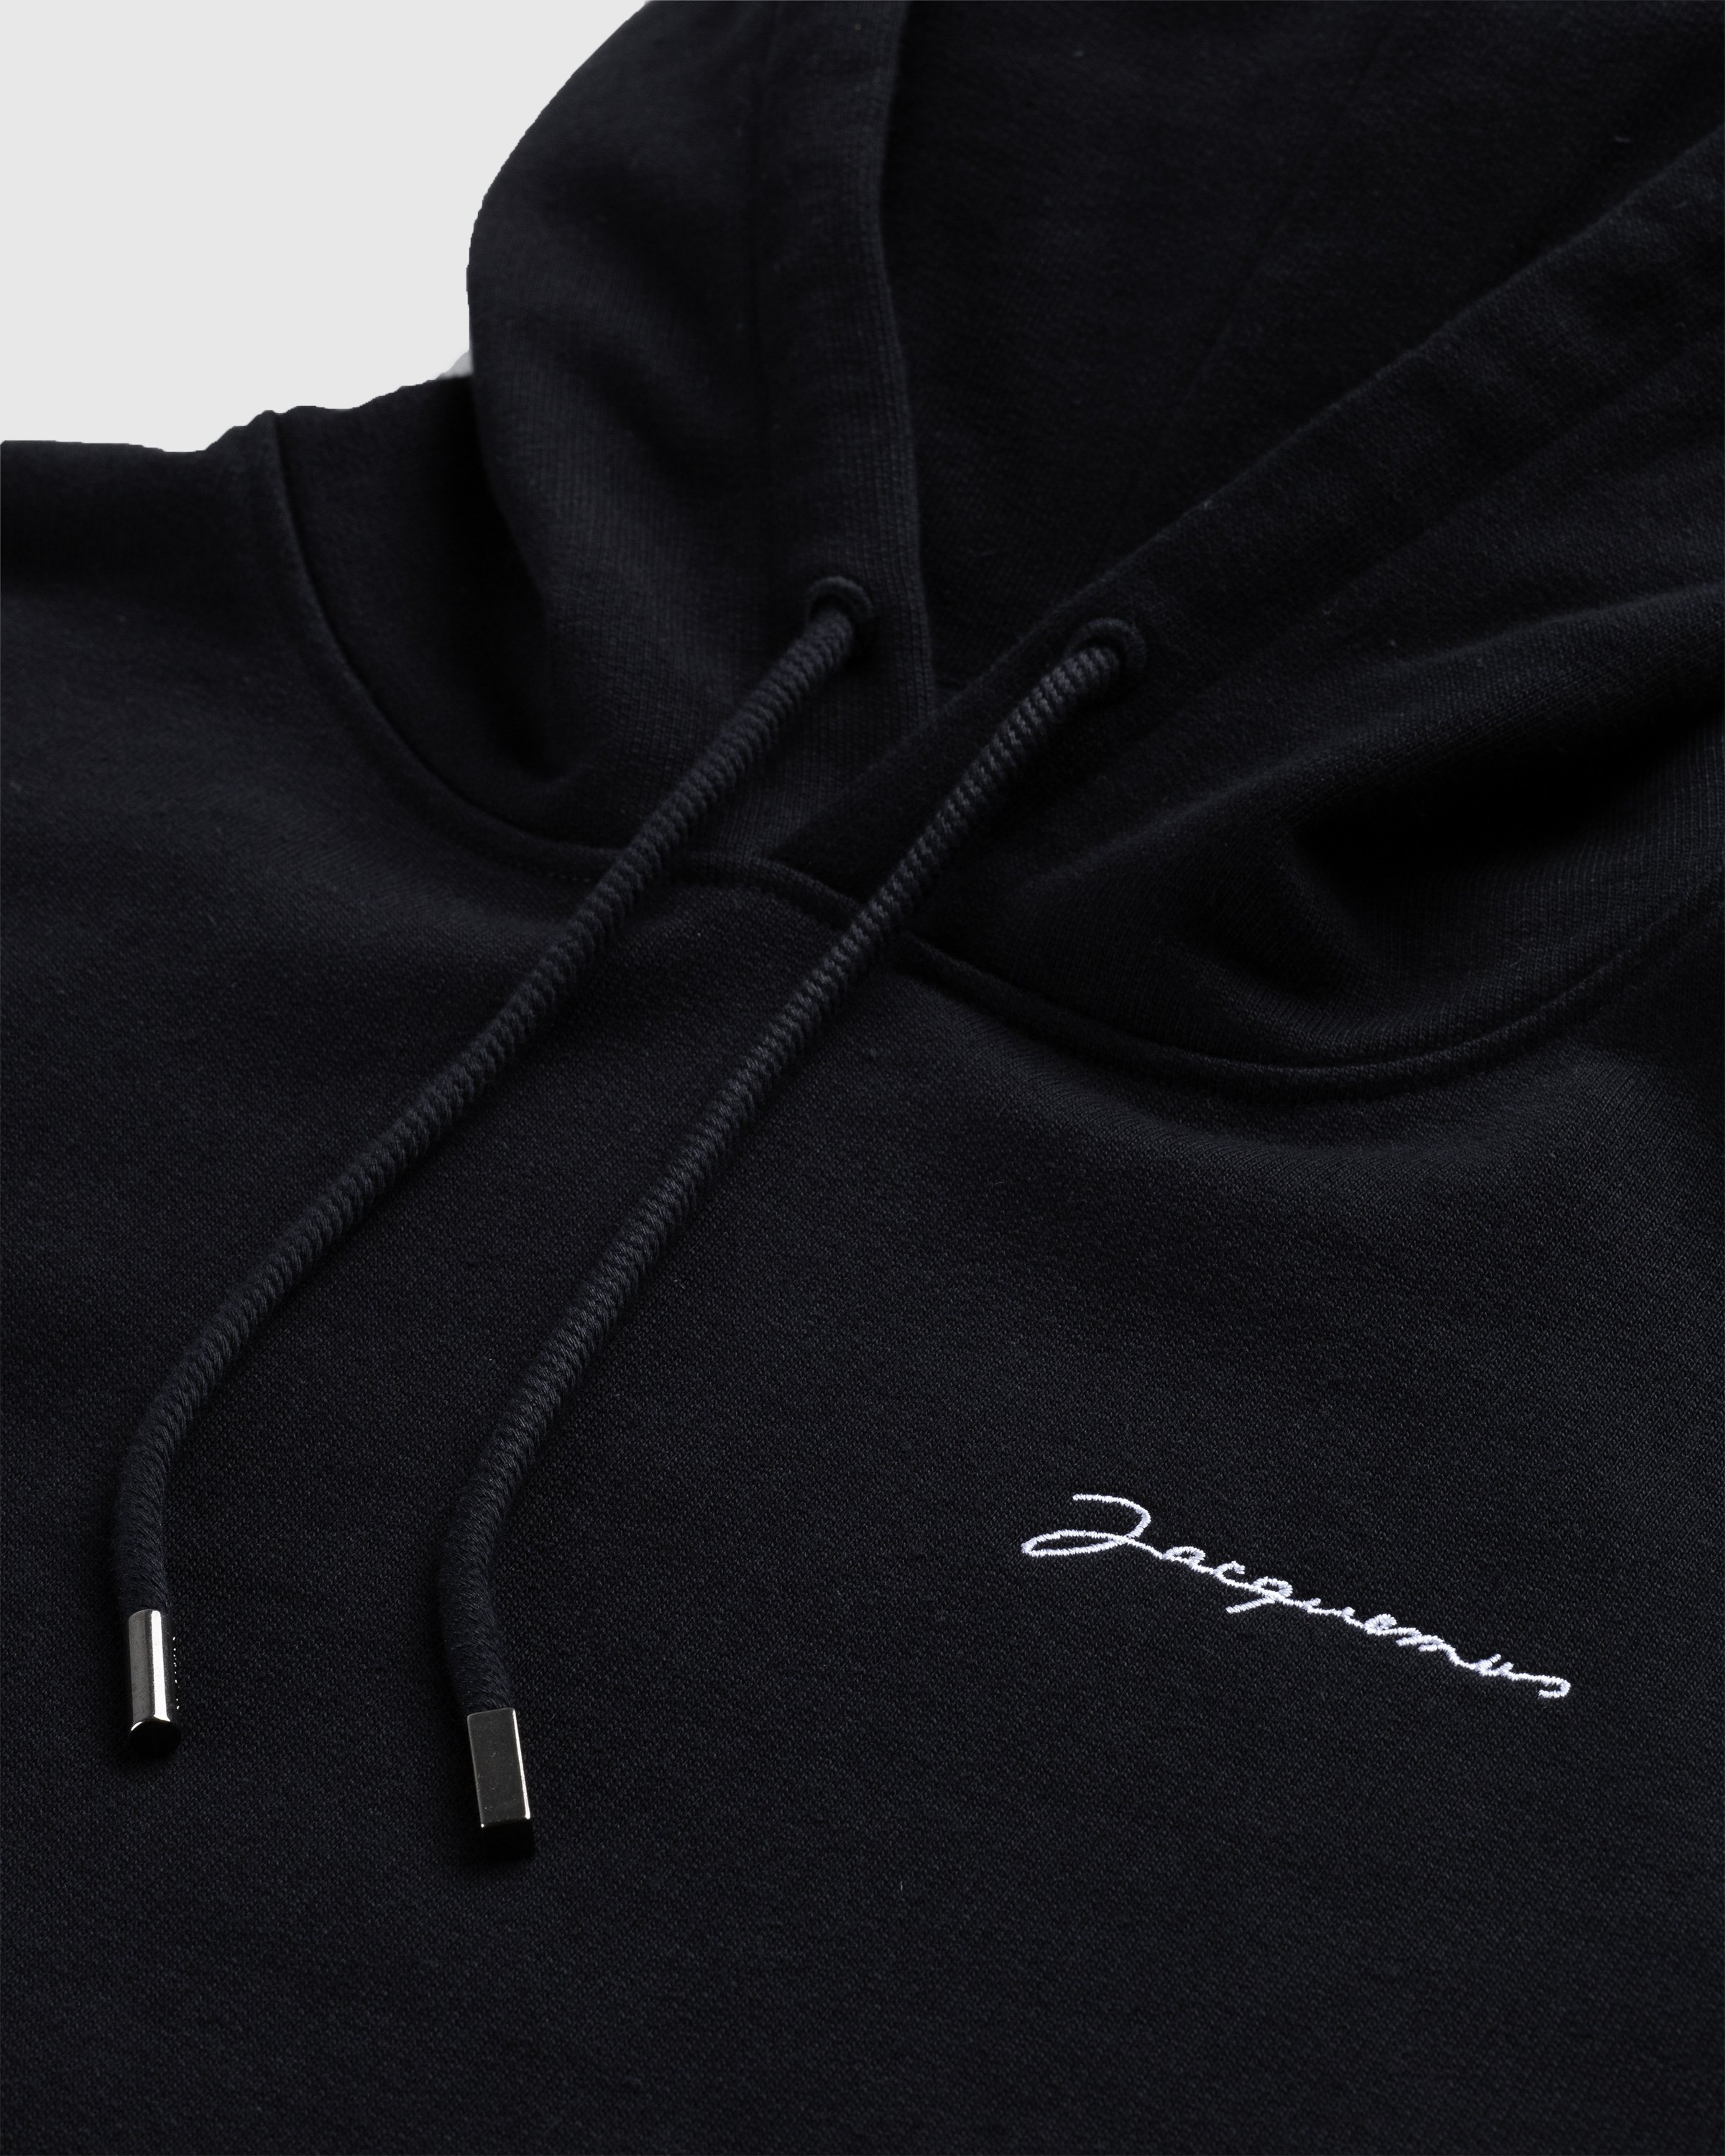 JACQUEMUS - Le Sweatshirt Brode Black - Clothing - BLACK - Image 5